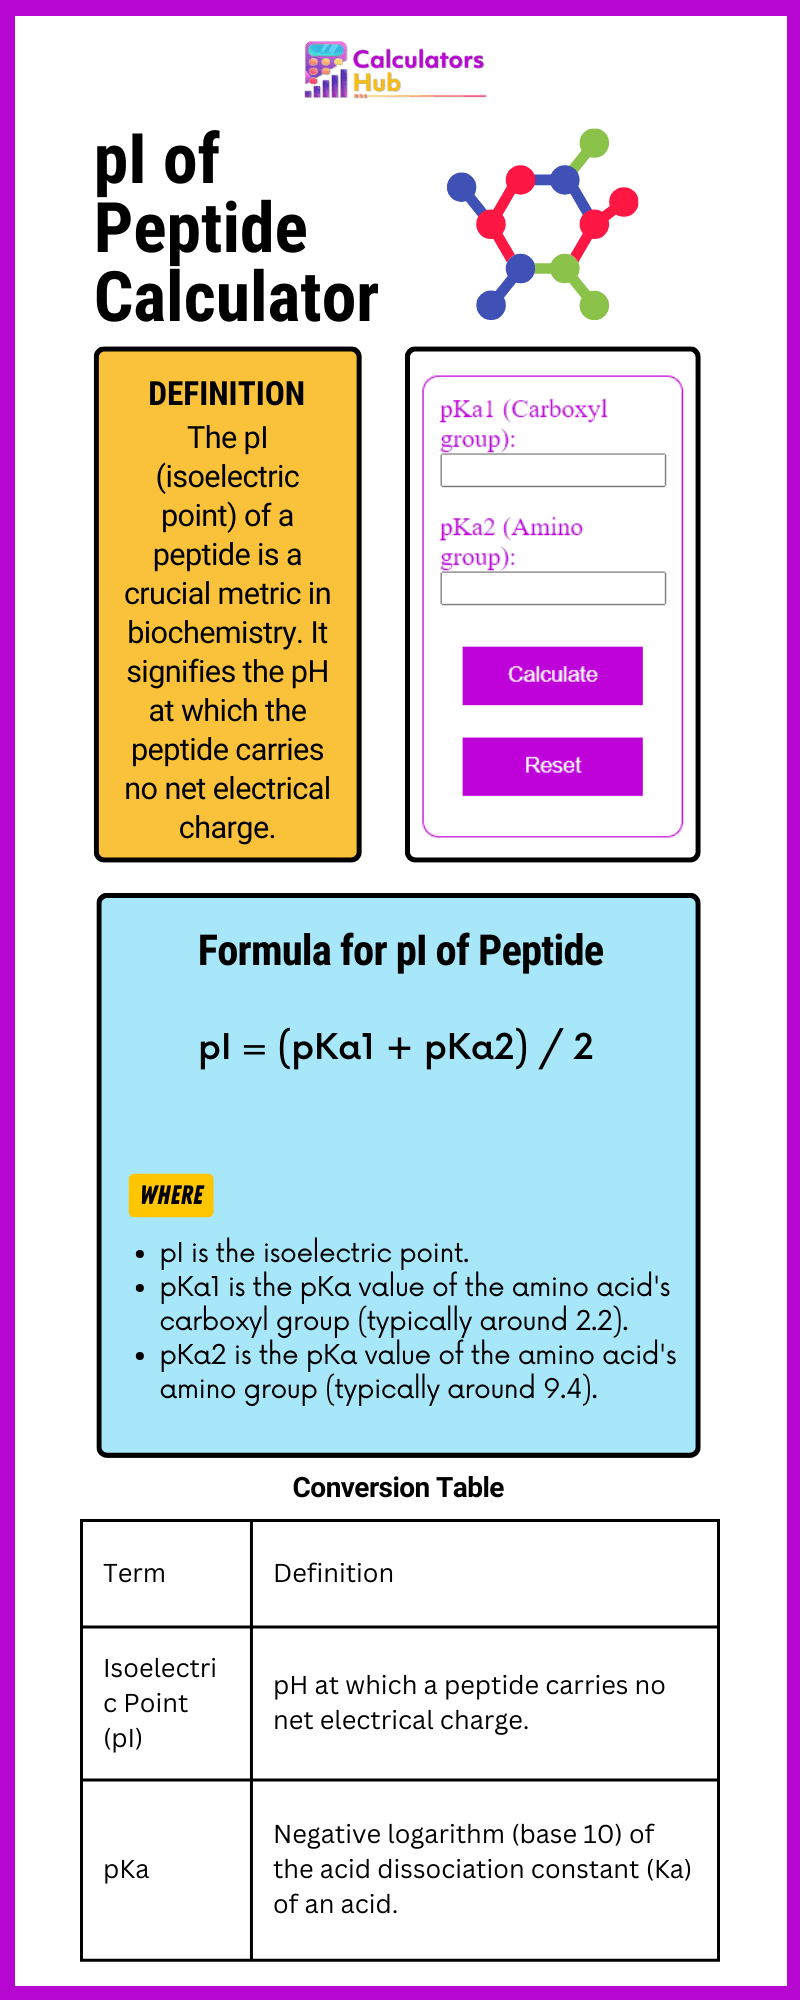 pI of Peptide Calculator